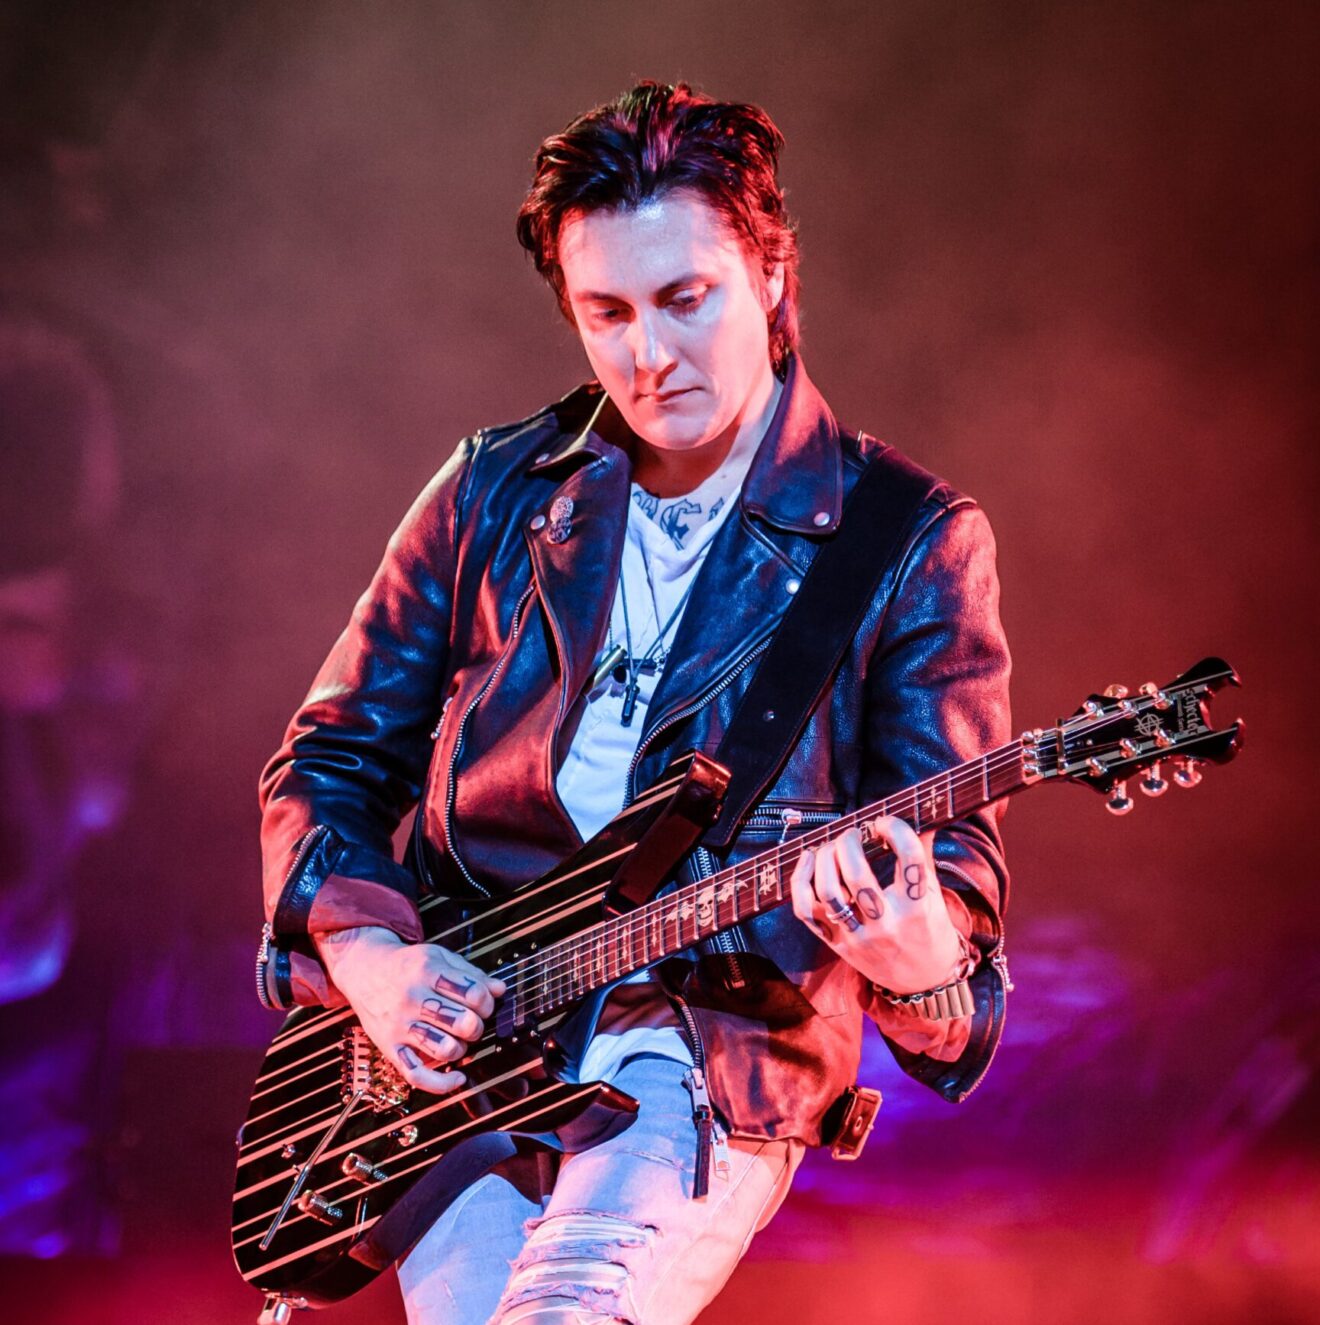 A7X Guitarist Injured During Concert